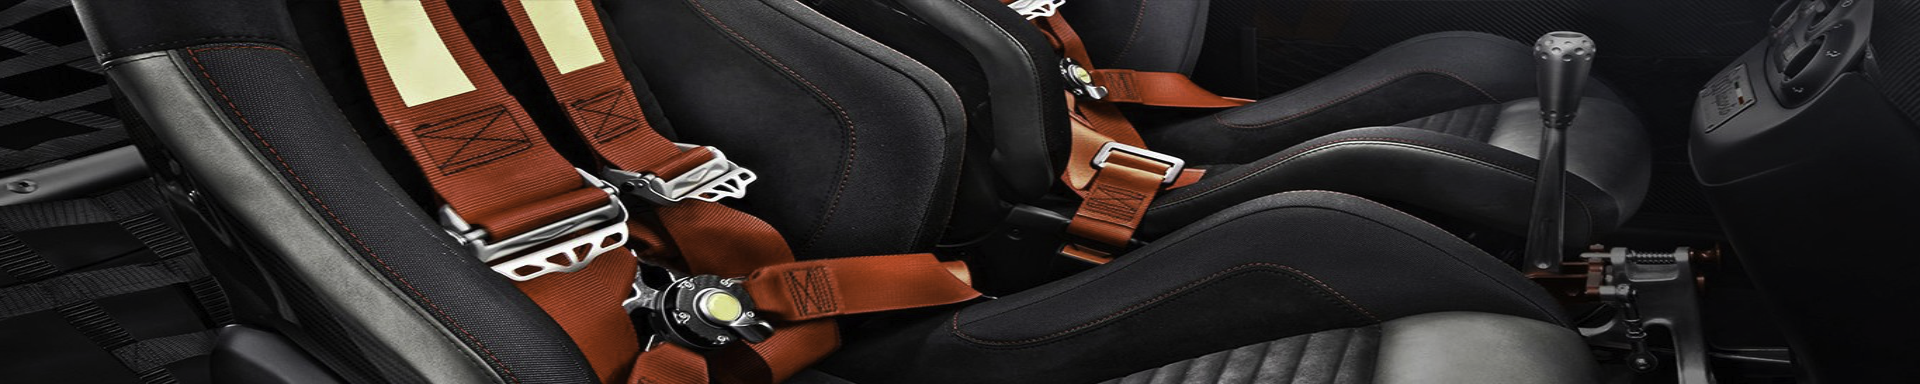 Seat Belts & Racing Harnesses | GarageAndFab.com | Munro Industries gf-100103051202